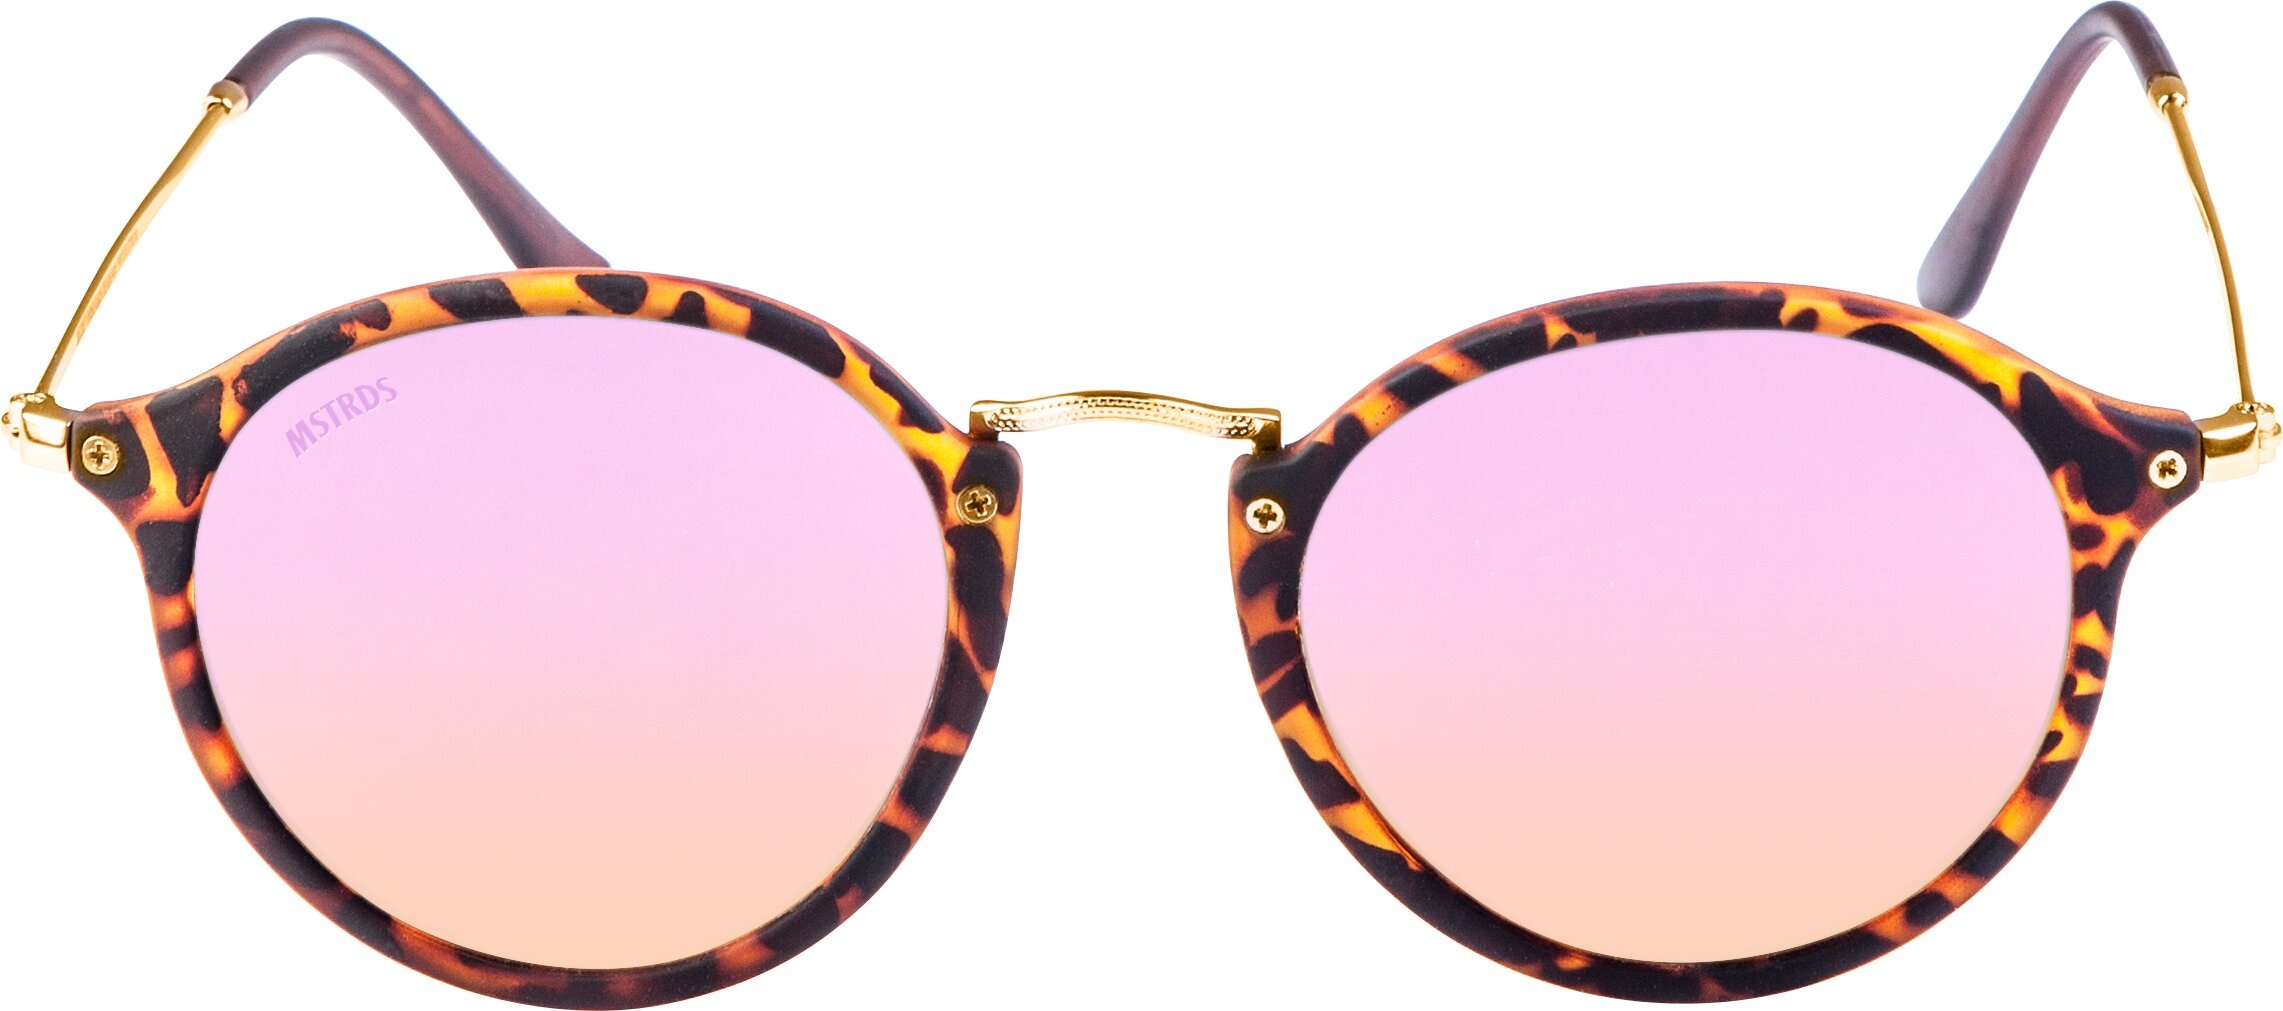 MSTRDS Sonnenbrille »Accessoires Sunglasses Spy« online bestellen | BAUR